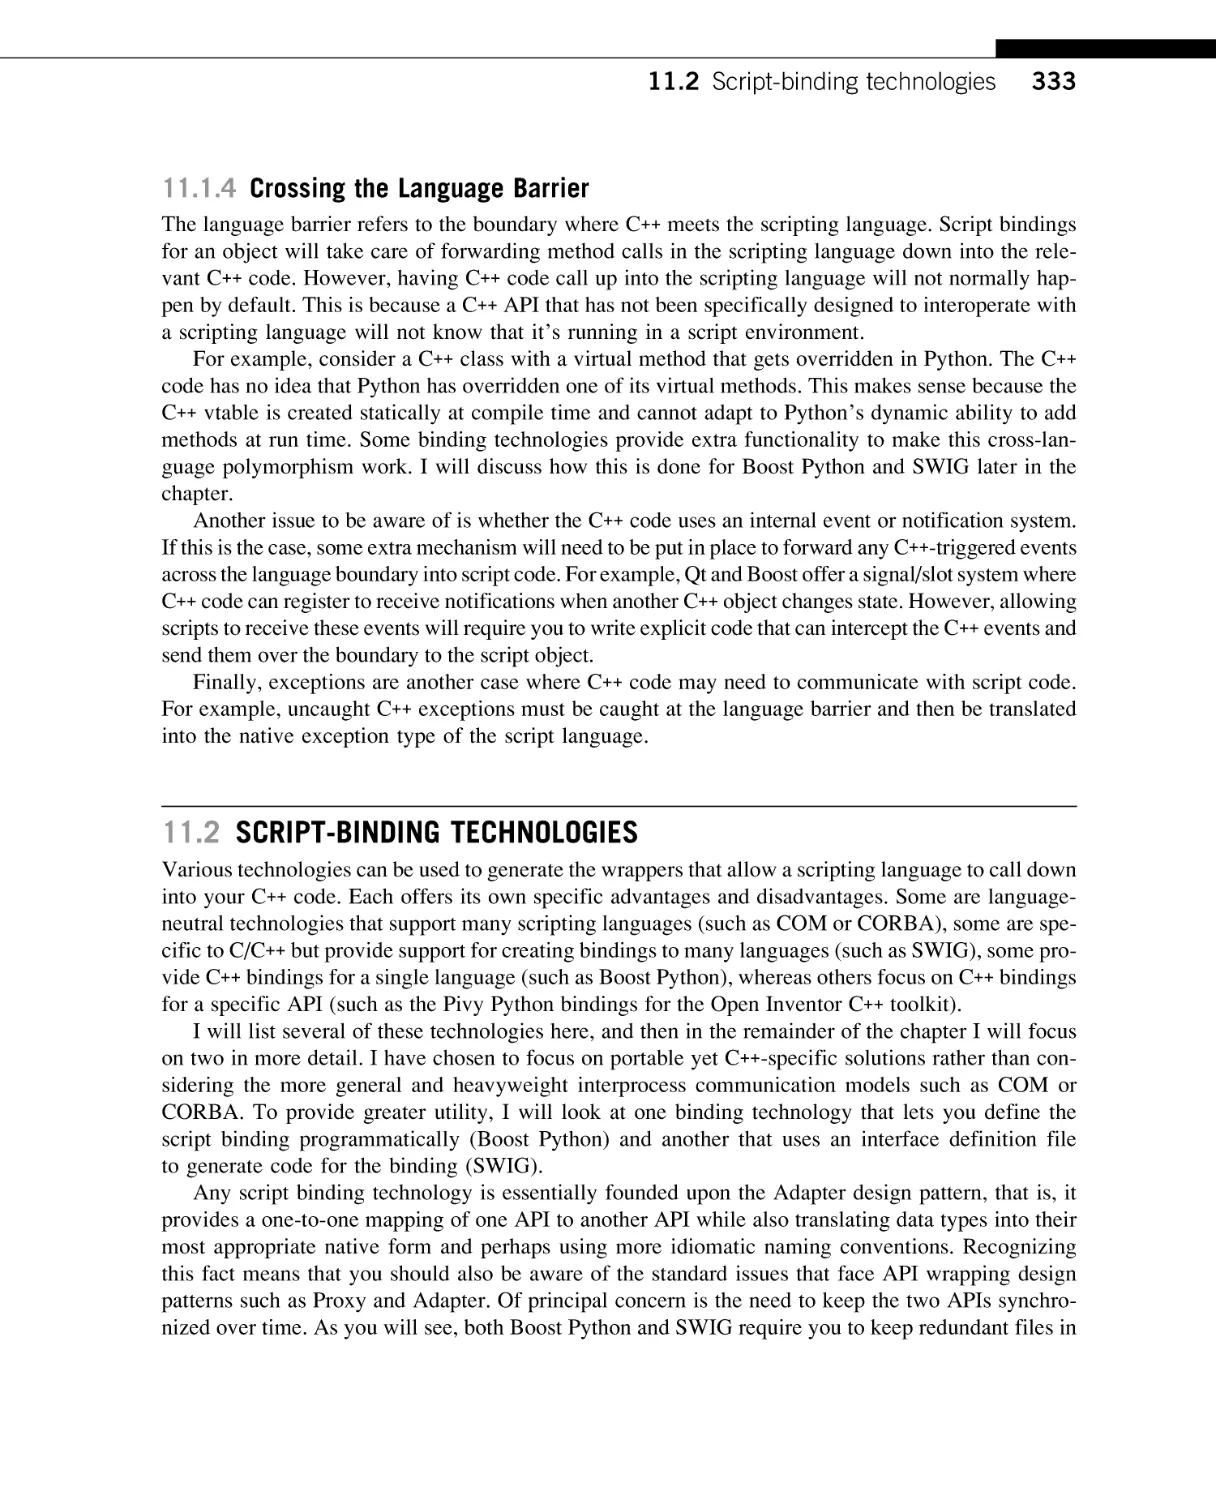 Crossing the Language Barrier
Script-binding Technologies